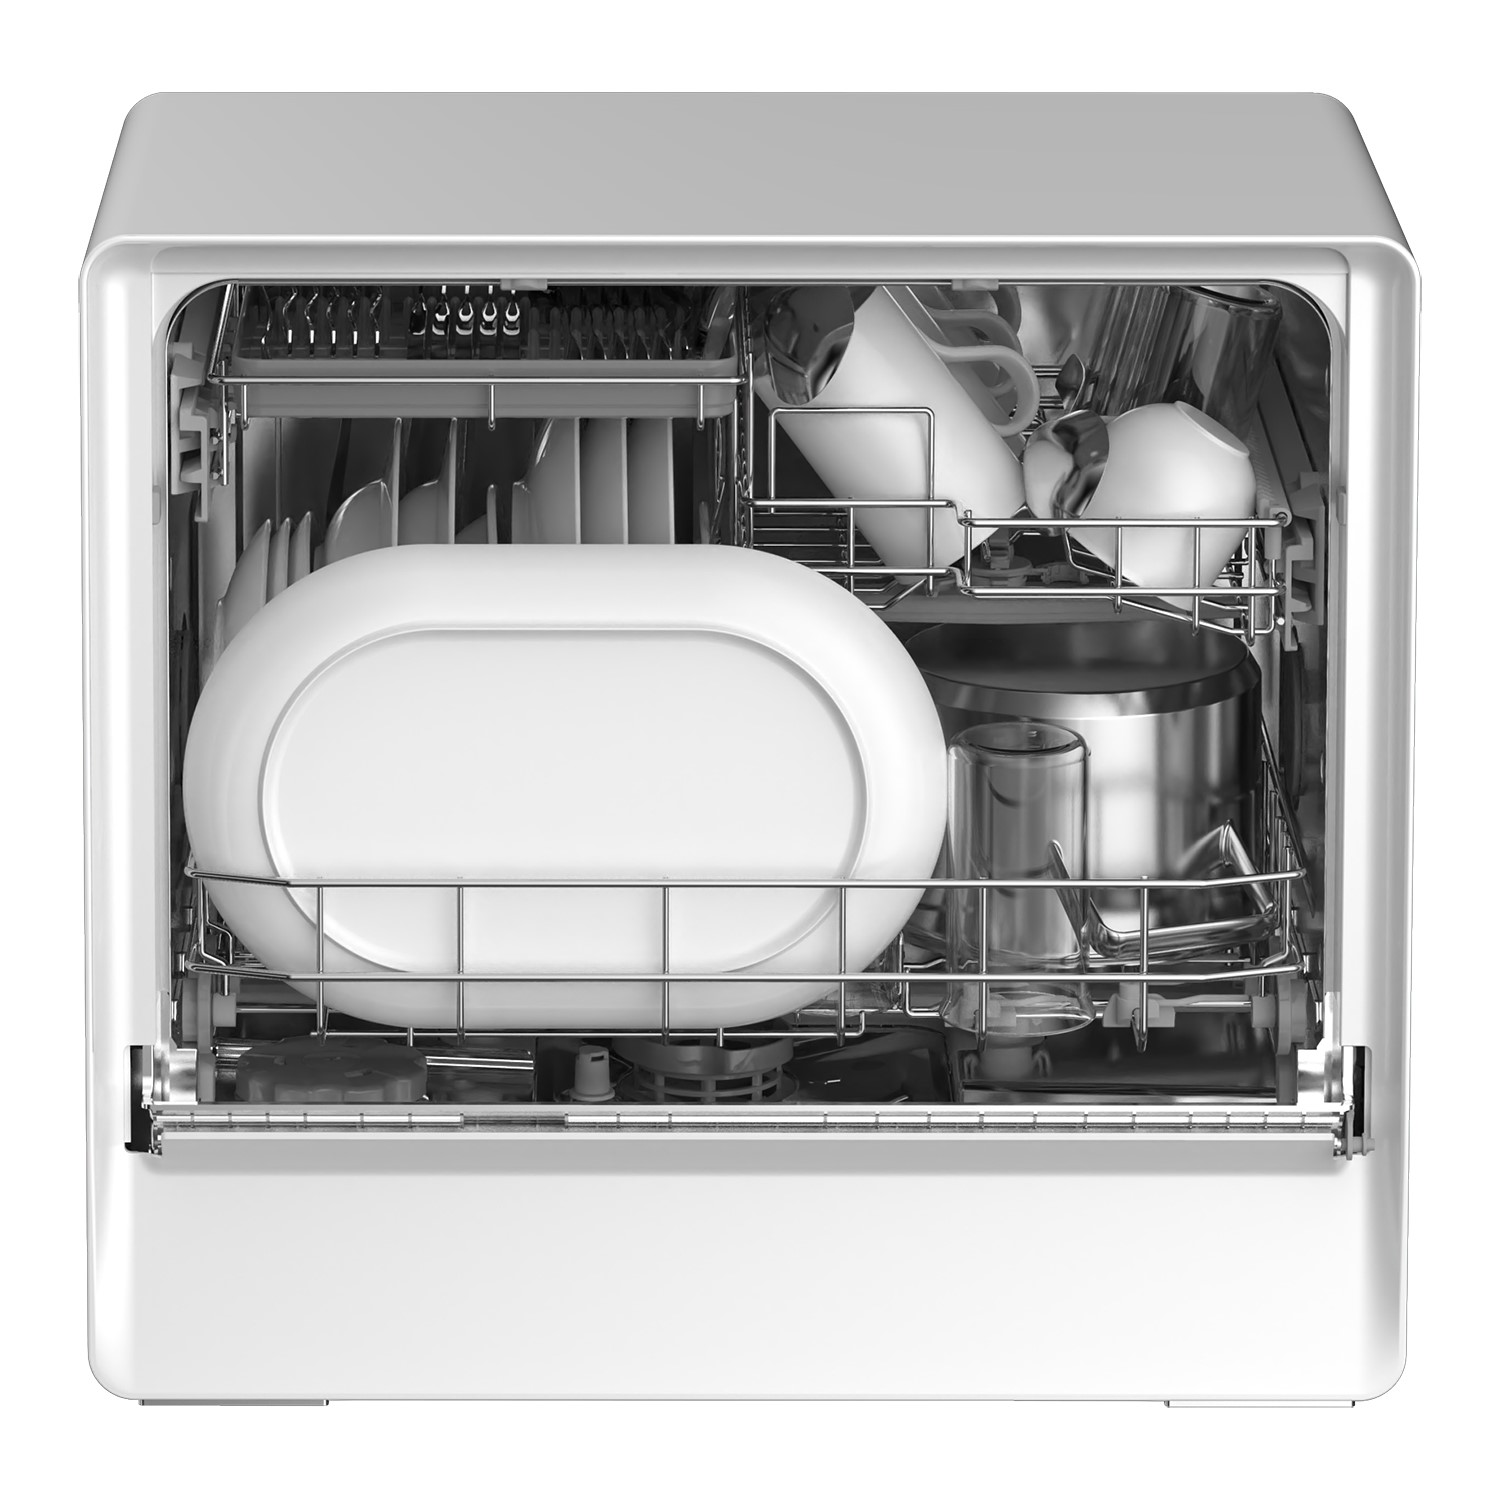 Best Dishwasher Sale & Discount Dishwashers on Sale